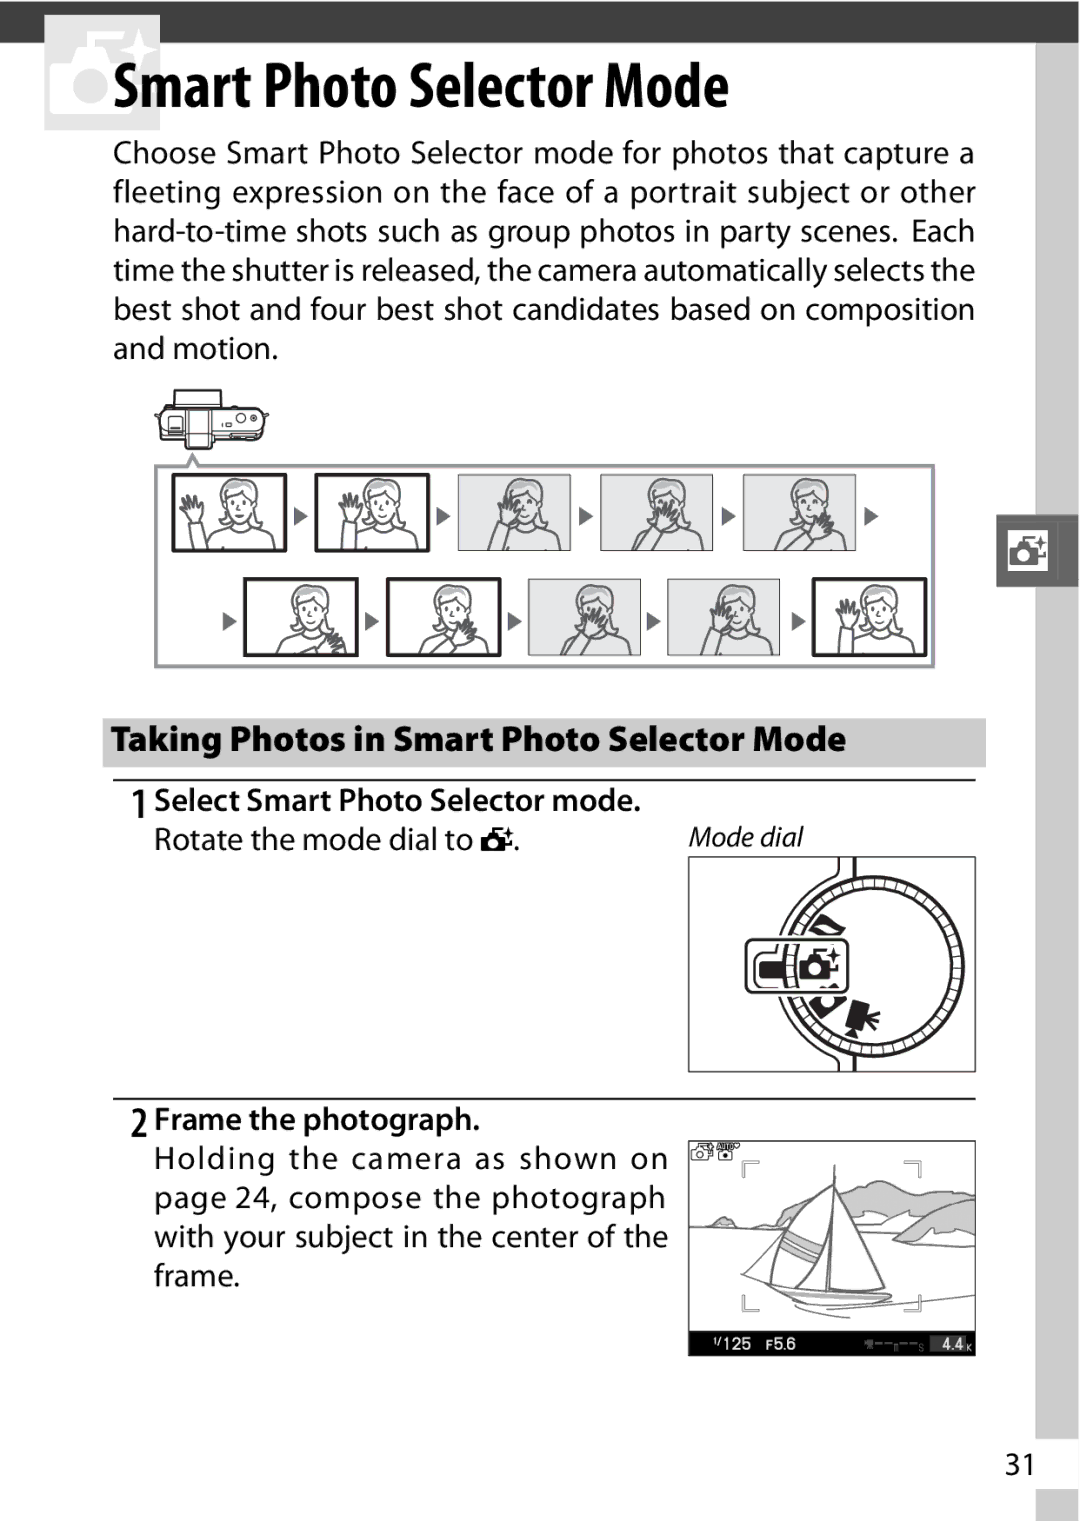 Nikon V1 manual Taking Photos in Smart Photo Selector Mode, Select Smart Photo Selector mode 